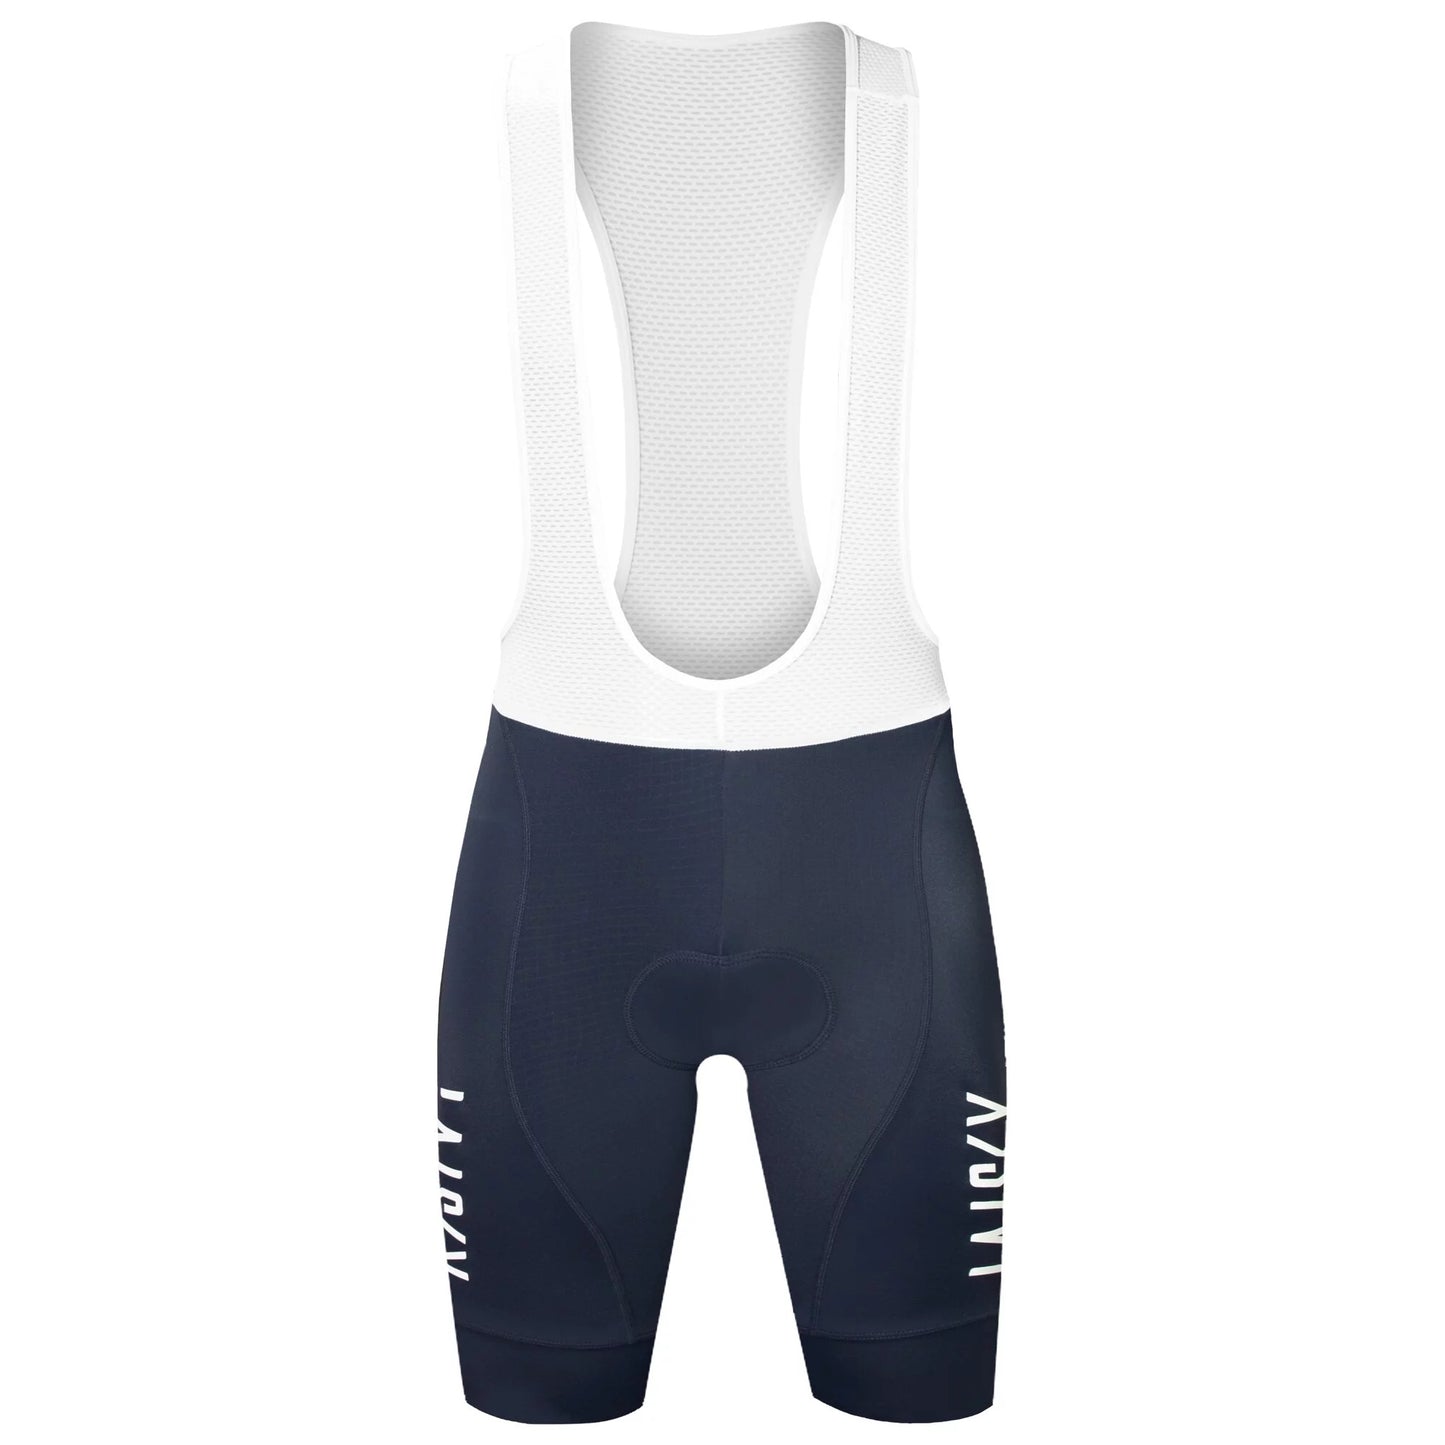 Baisky Endurance Bib Shorts with Vion Insert Pads ─ TRMB1680 Endurance Blue